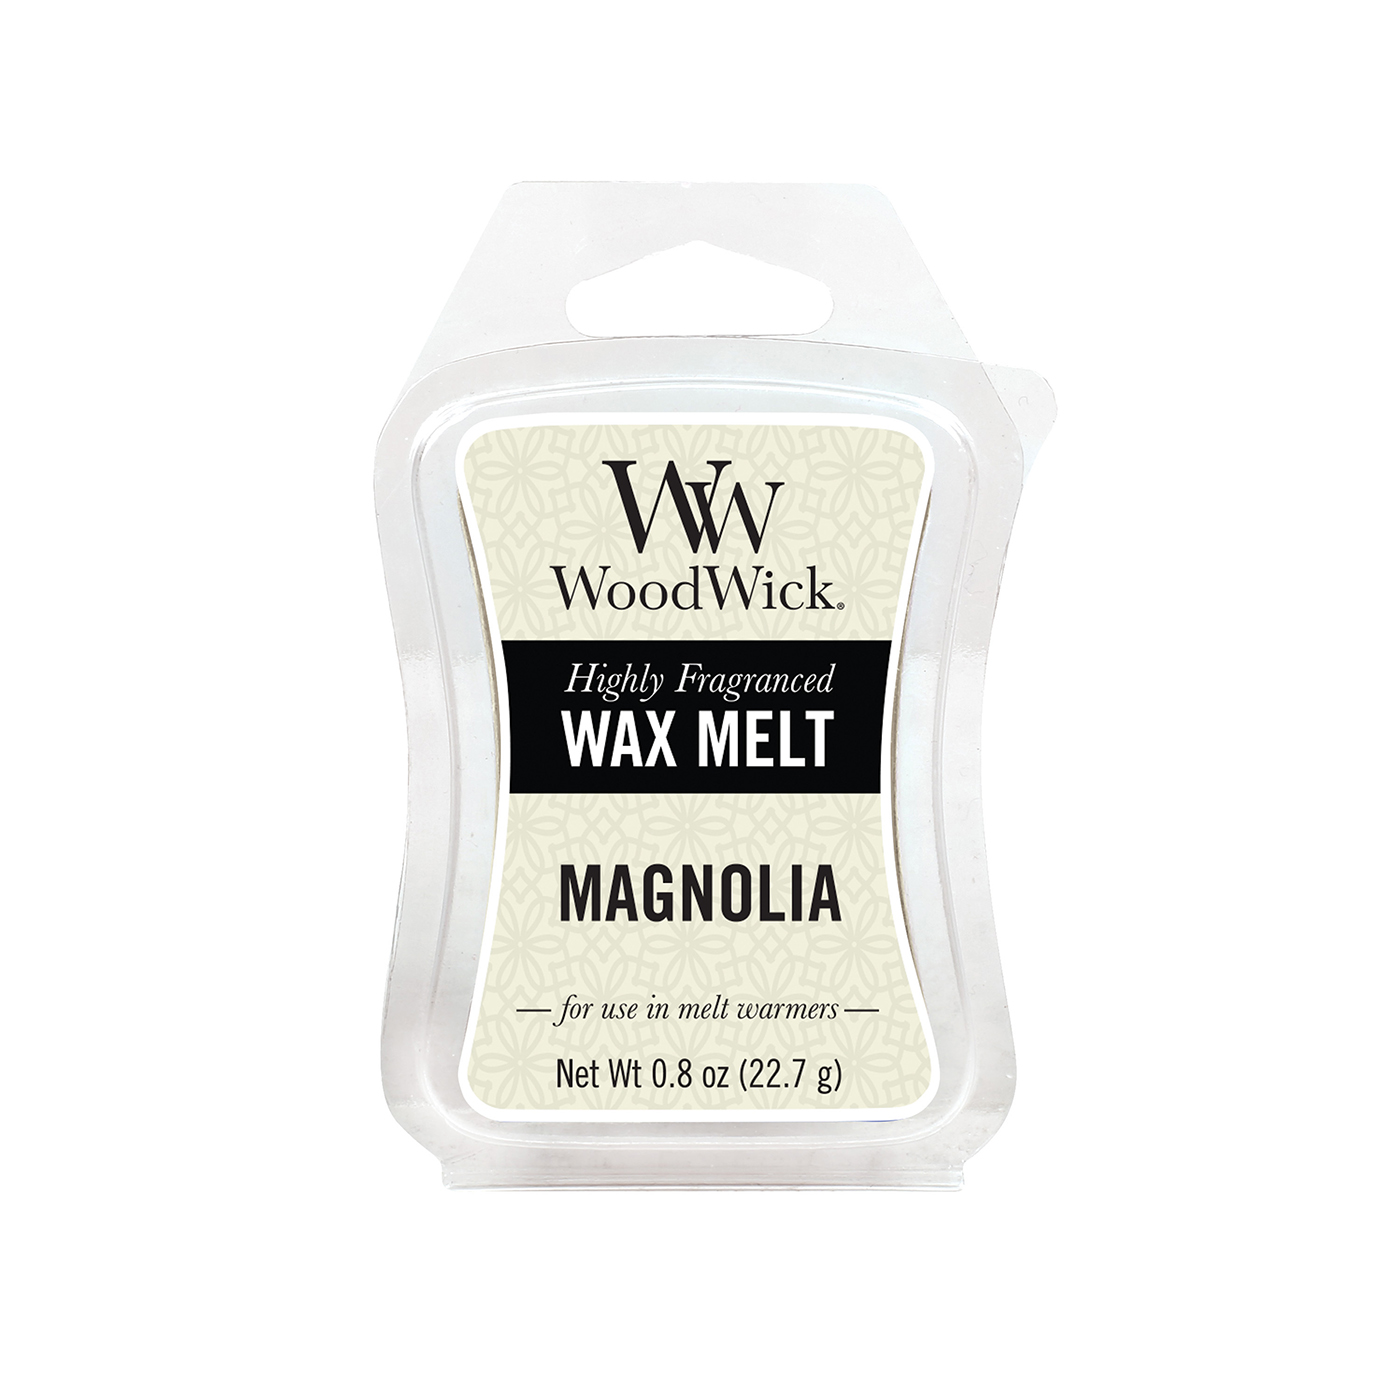 Magnolia Birch Wax Melt by Woodwick